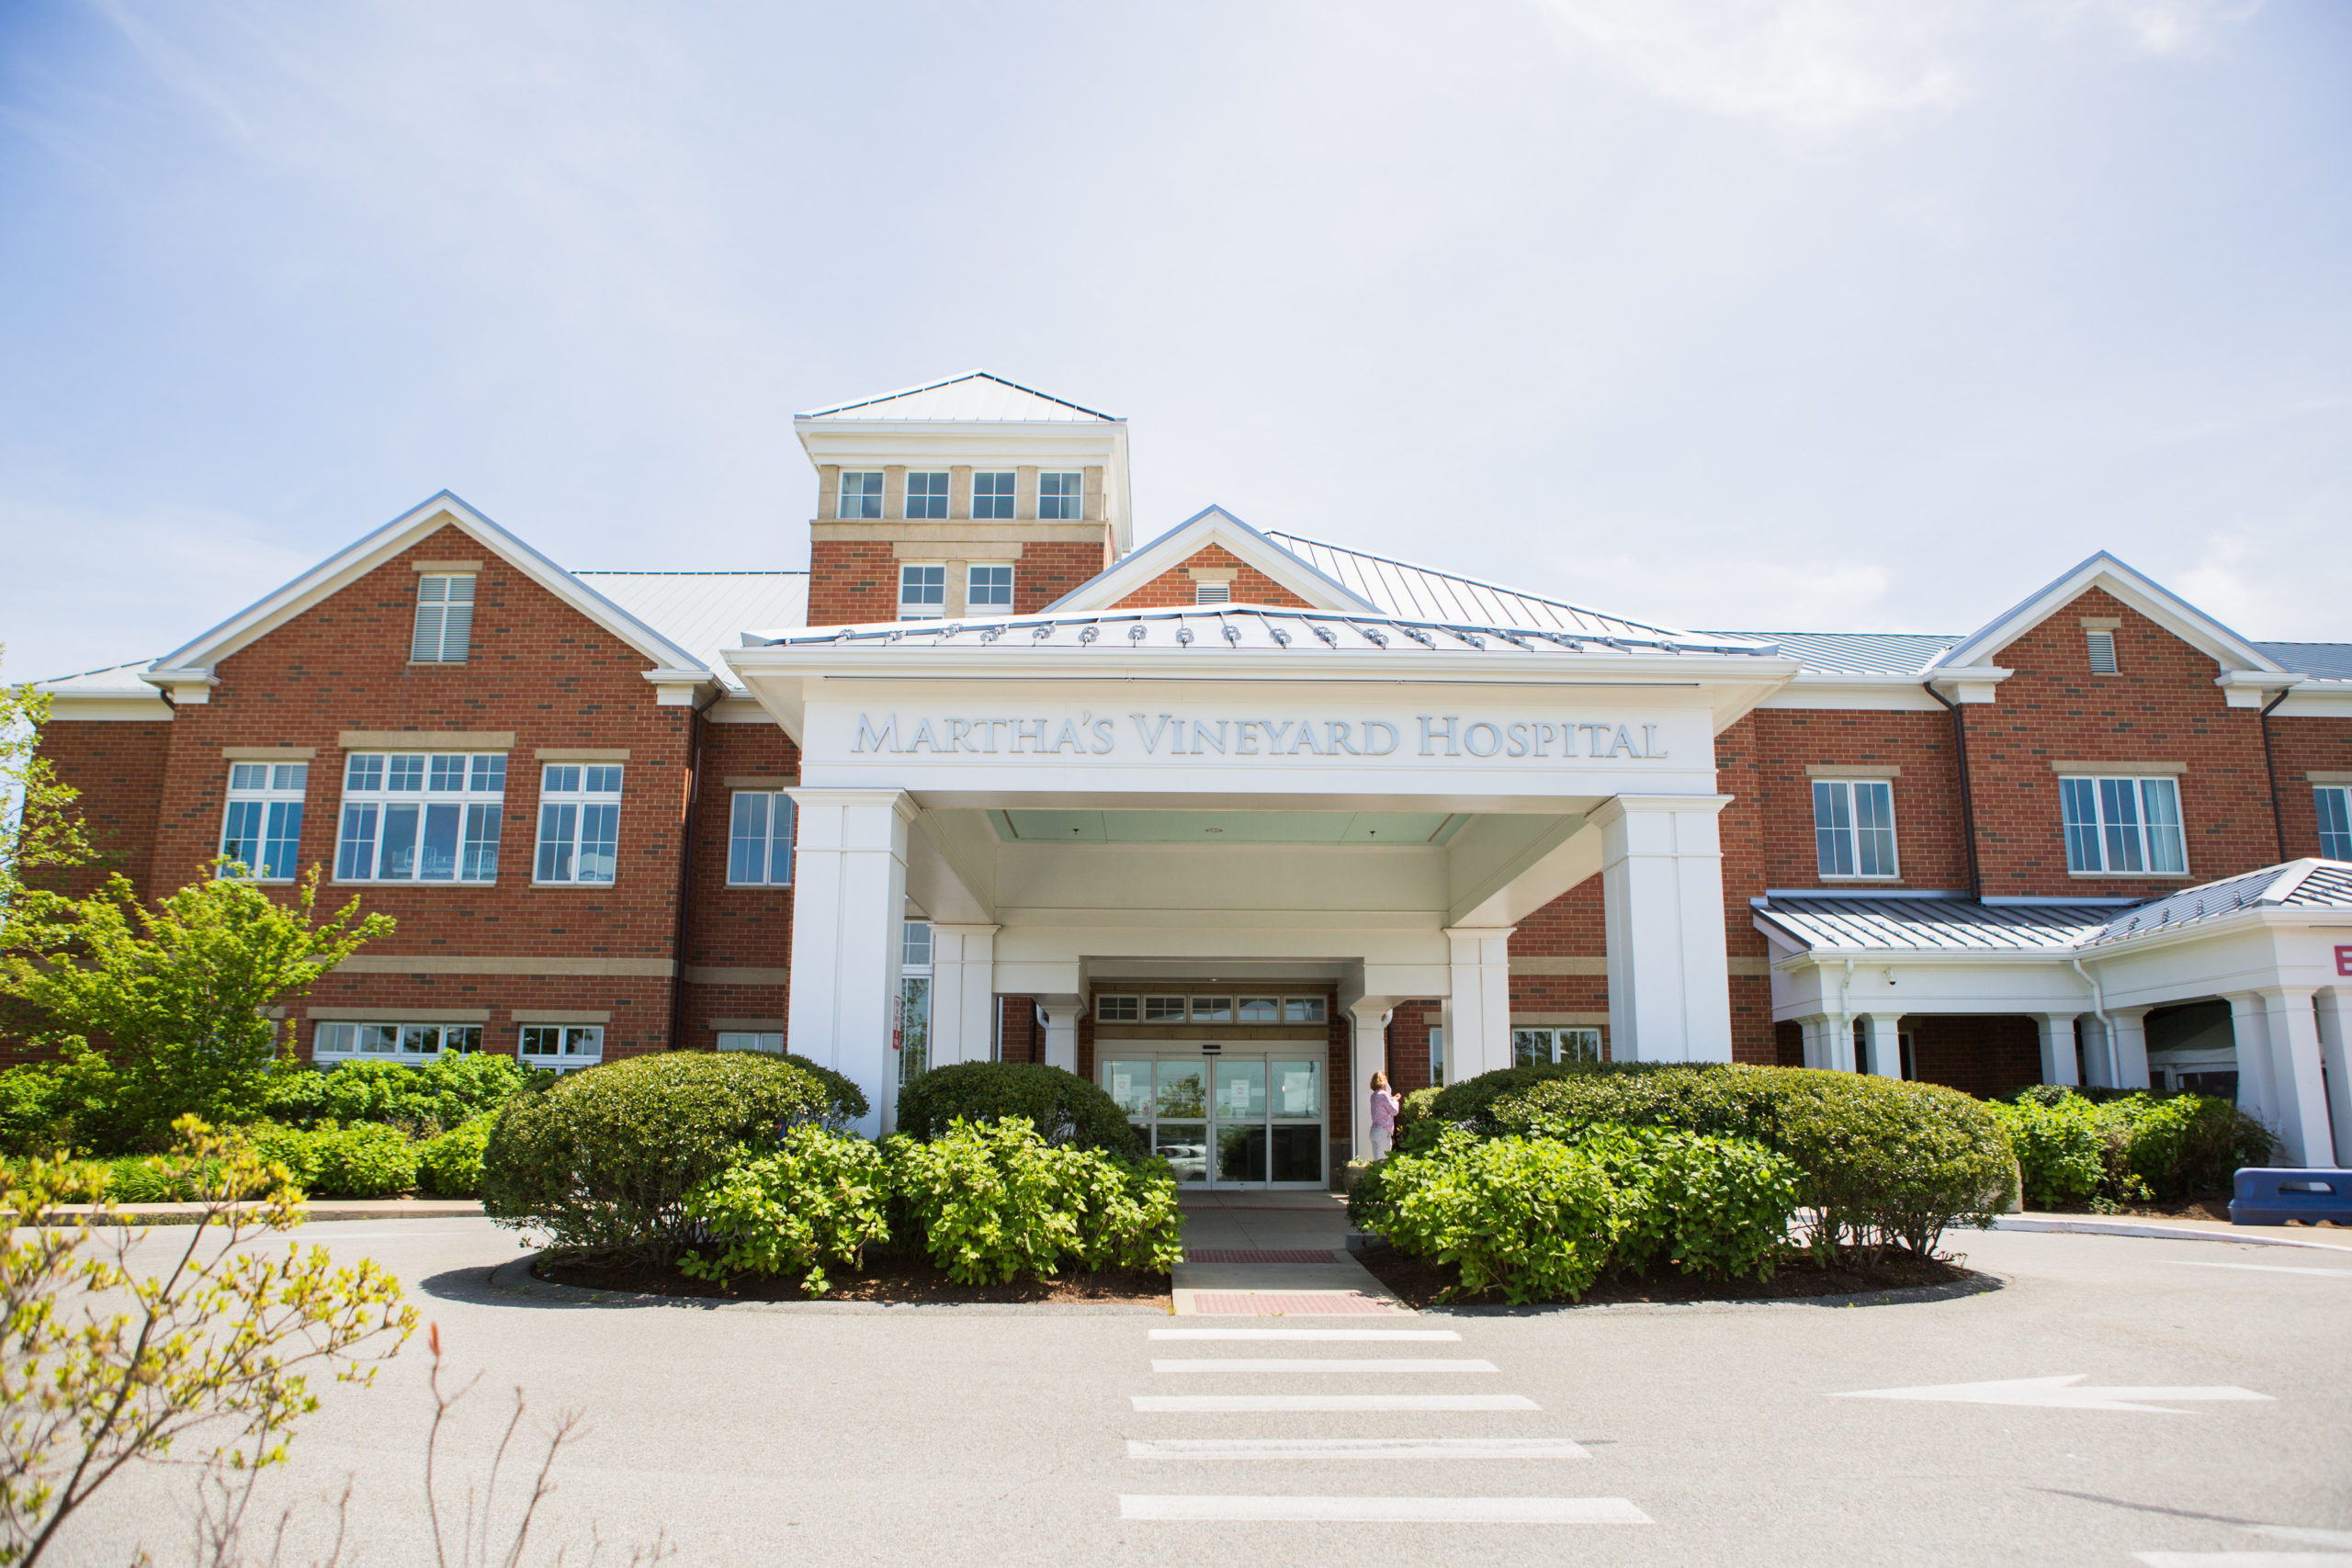 Image of Martha's Vineyard Hospital entrance.